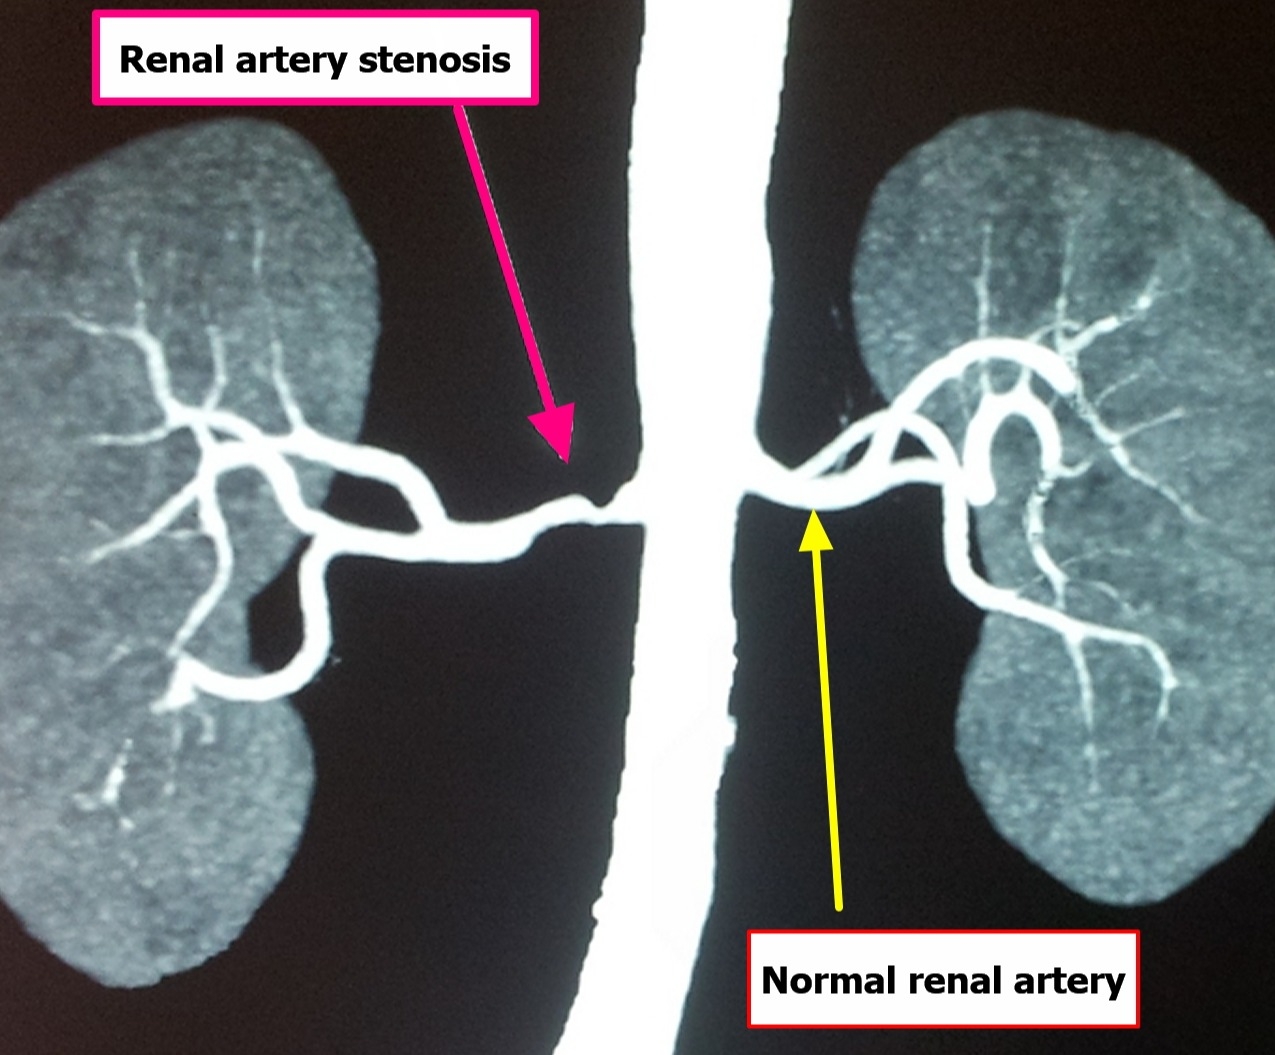 
Renal Artery Stenosis 